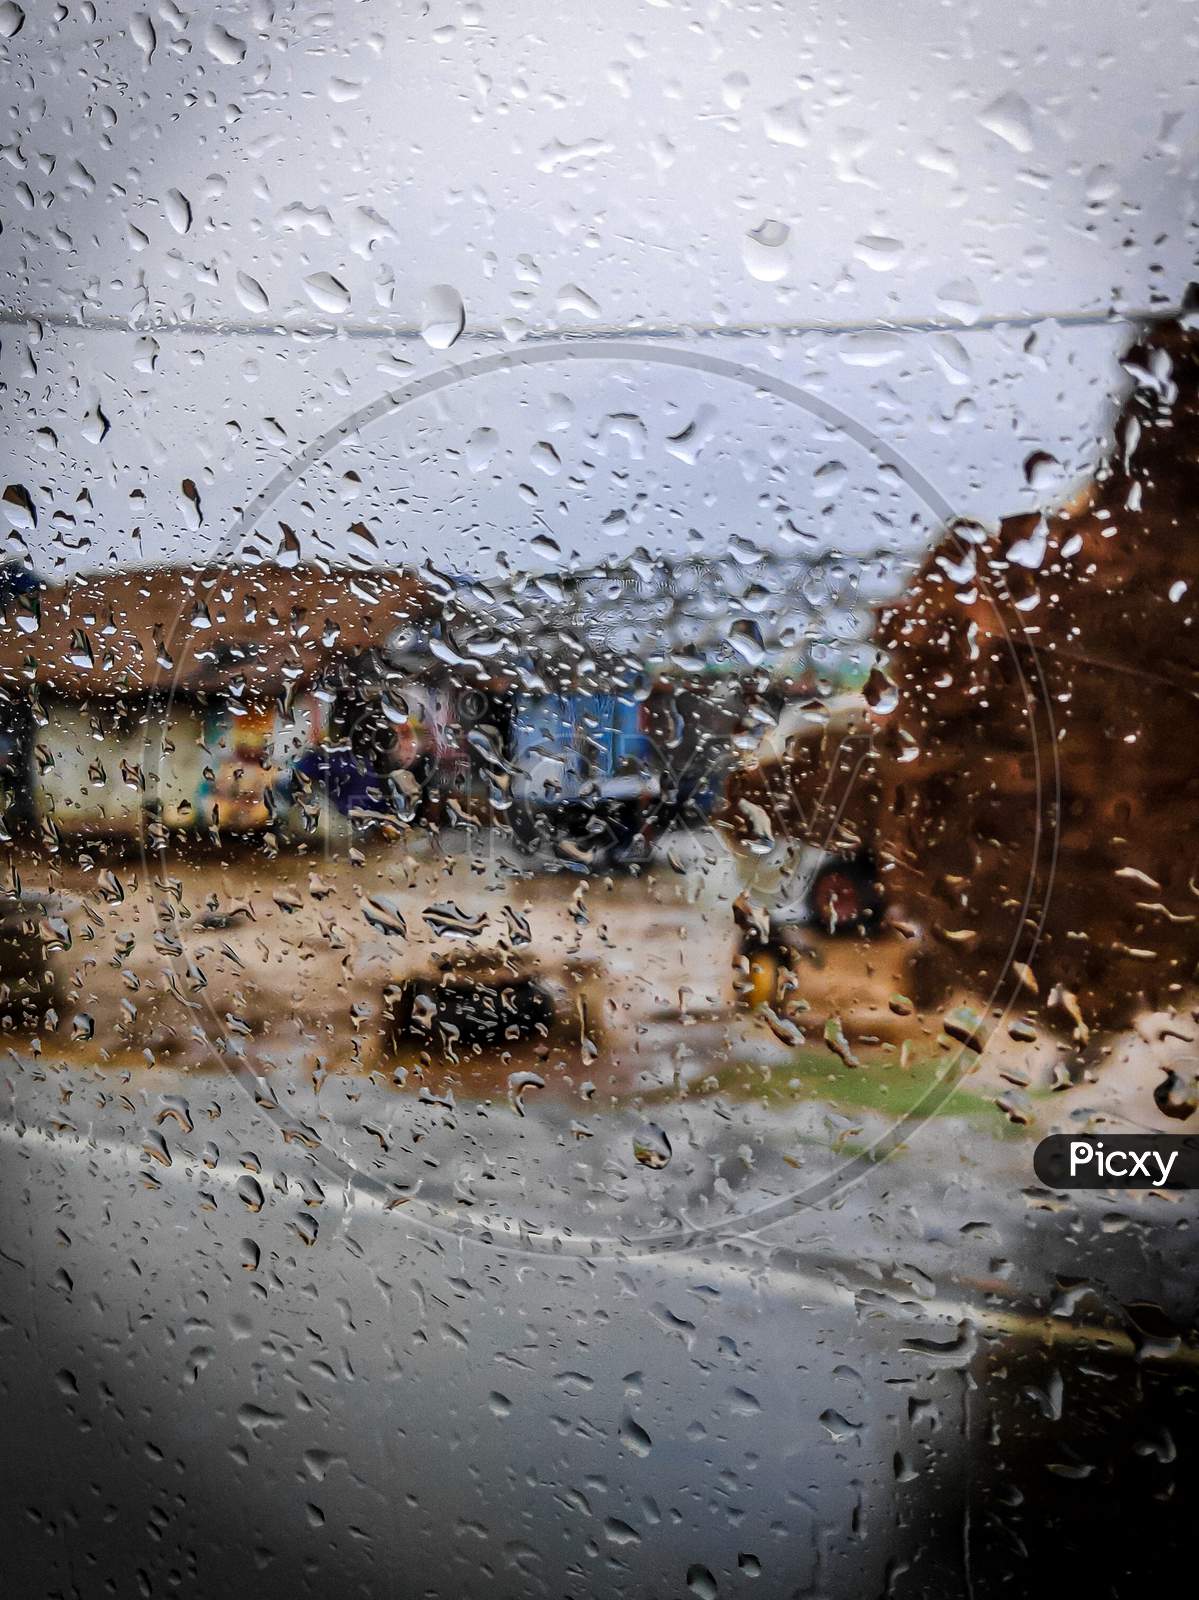 scenery through rainy windshield